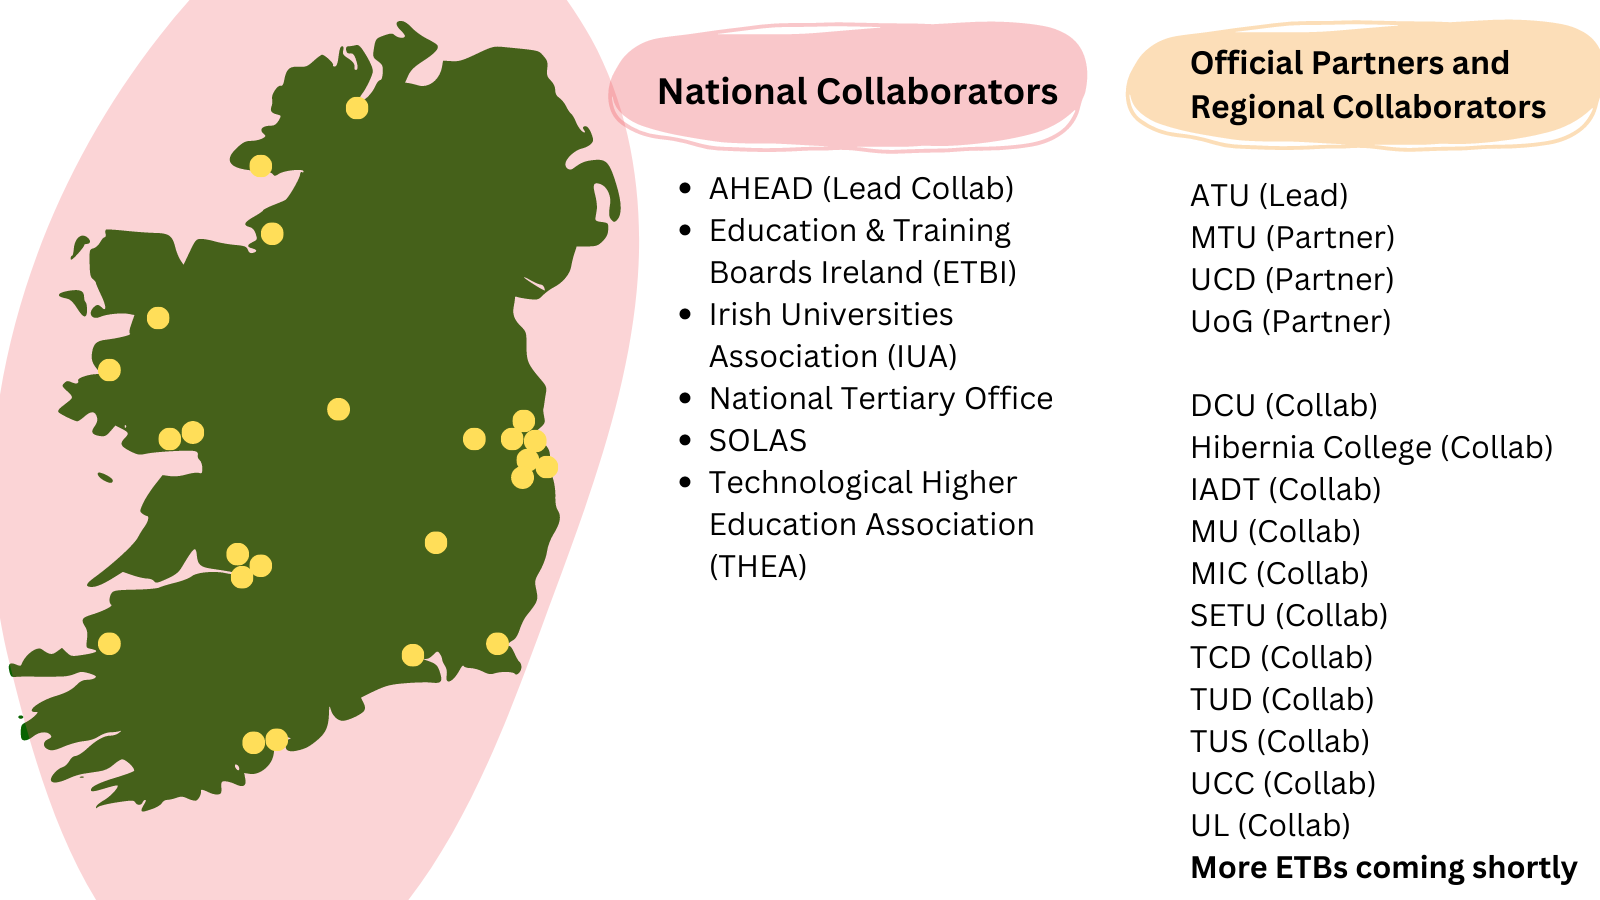 National Collaborators AHEAD (Lead Collab); ETBI Irish Universities Association; National Tertiary Office; SOLAS; Technological Higher Education Association. Official Partners and Regional Collaborators - ATU (Lead), MTU (Partner), UCD (Partner), UoG (Partner), DCU (Collab), Hibernia College (Collab), IADT (Collab), MU (Collab). MIC (Collab), SETU (Collab), TCD (Collab), TUS (Collab), TUD (Collab), UCC (Collab), UL (Collab).